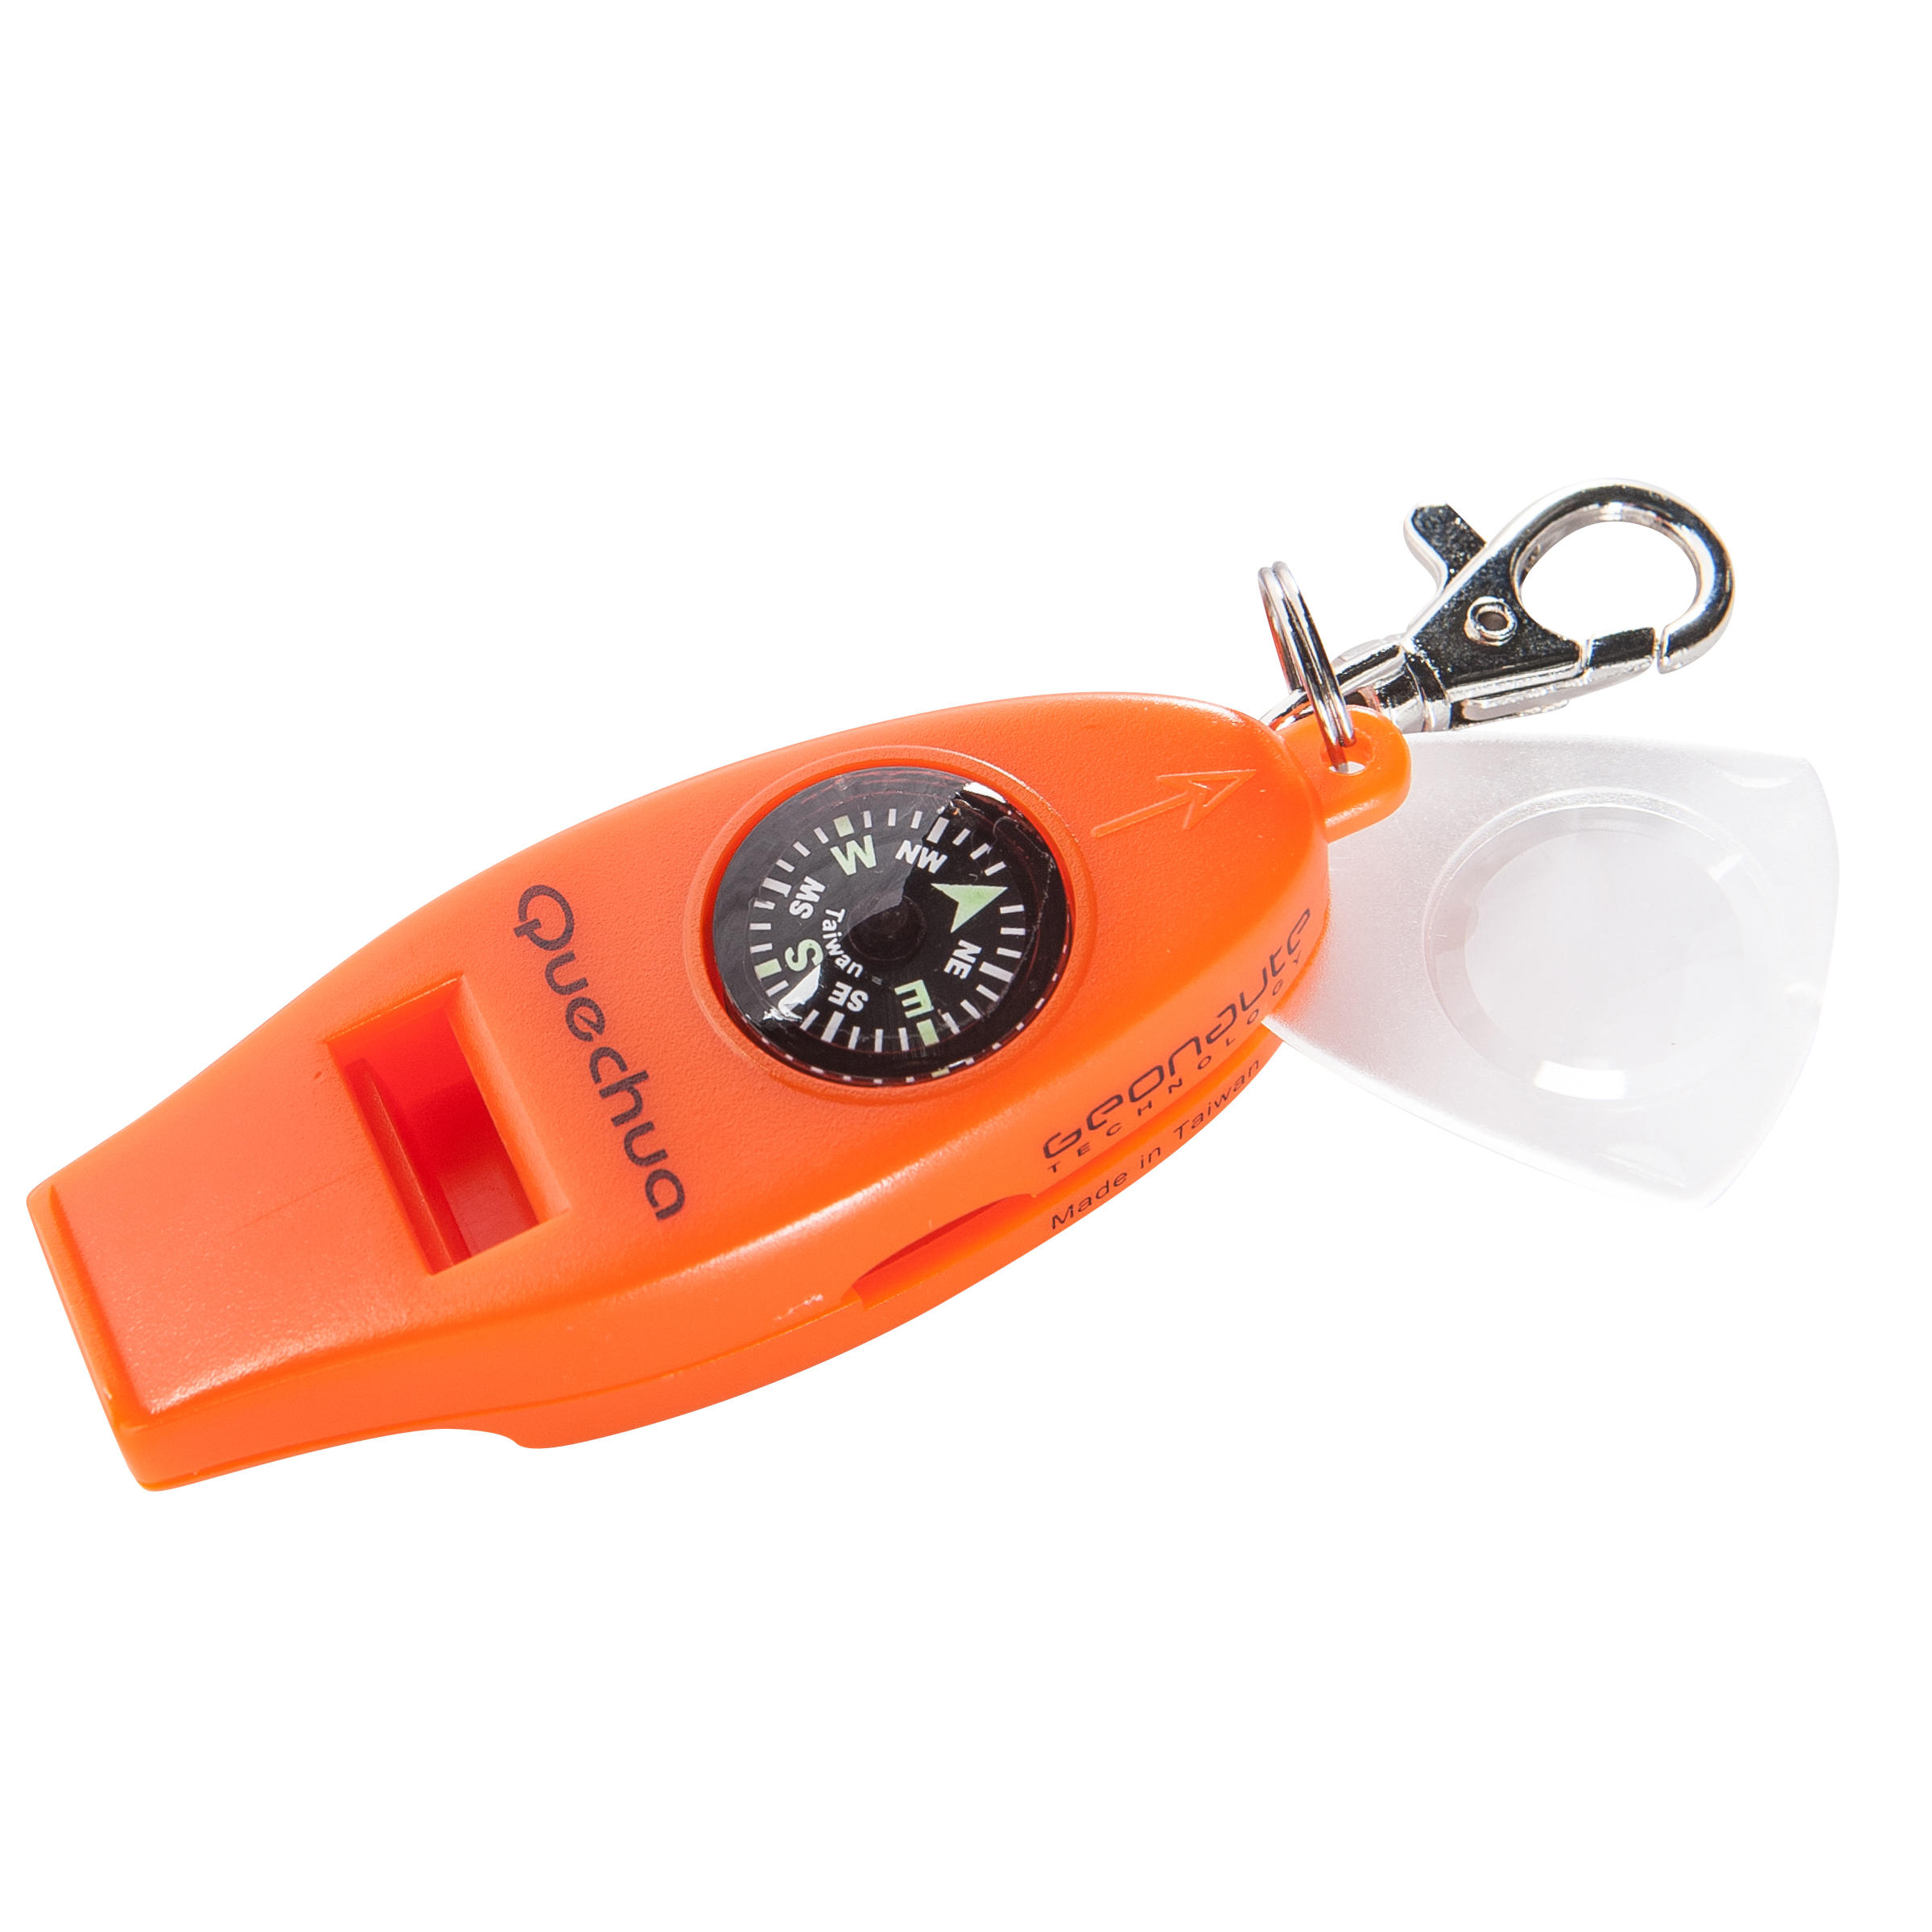 WM QUECHUA 100 multi-purpose whistle compass 1/12